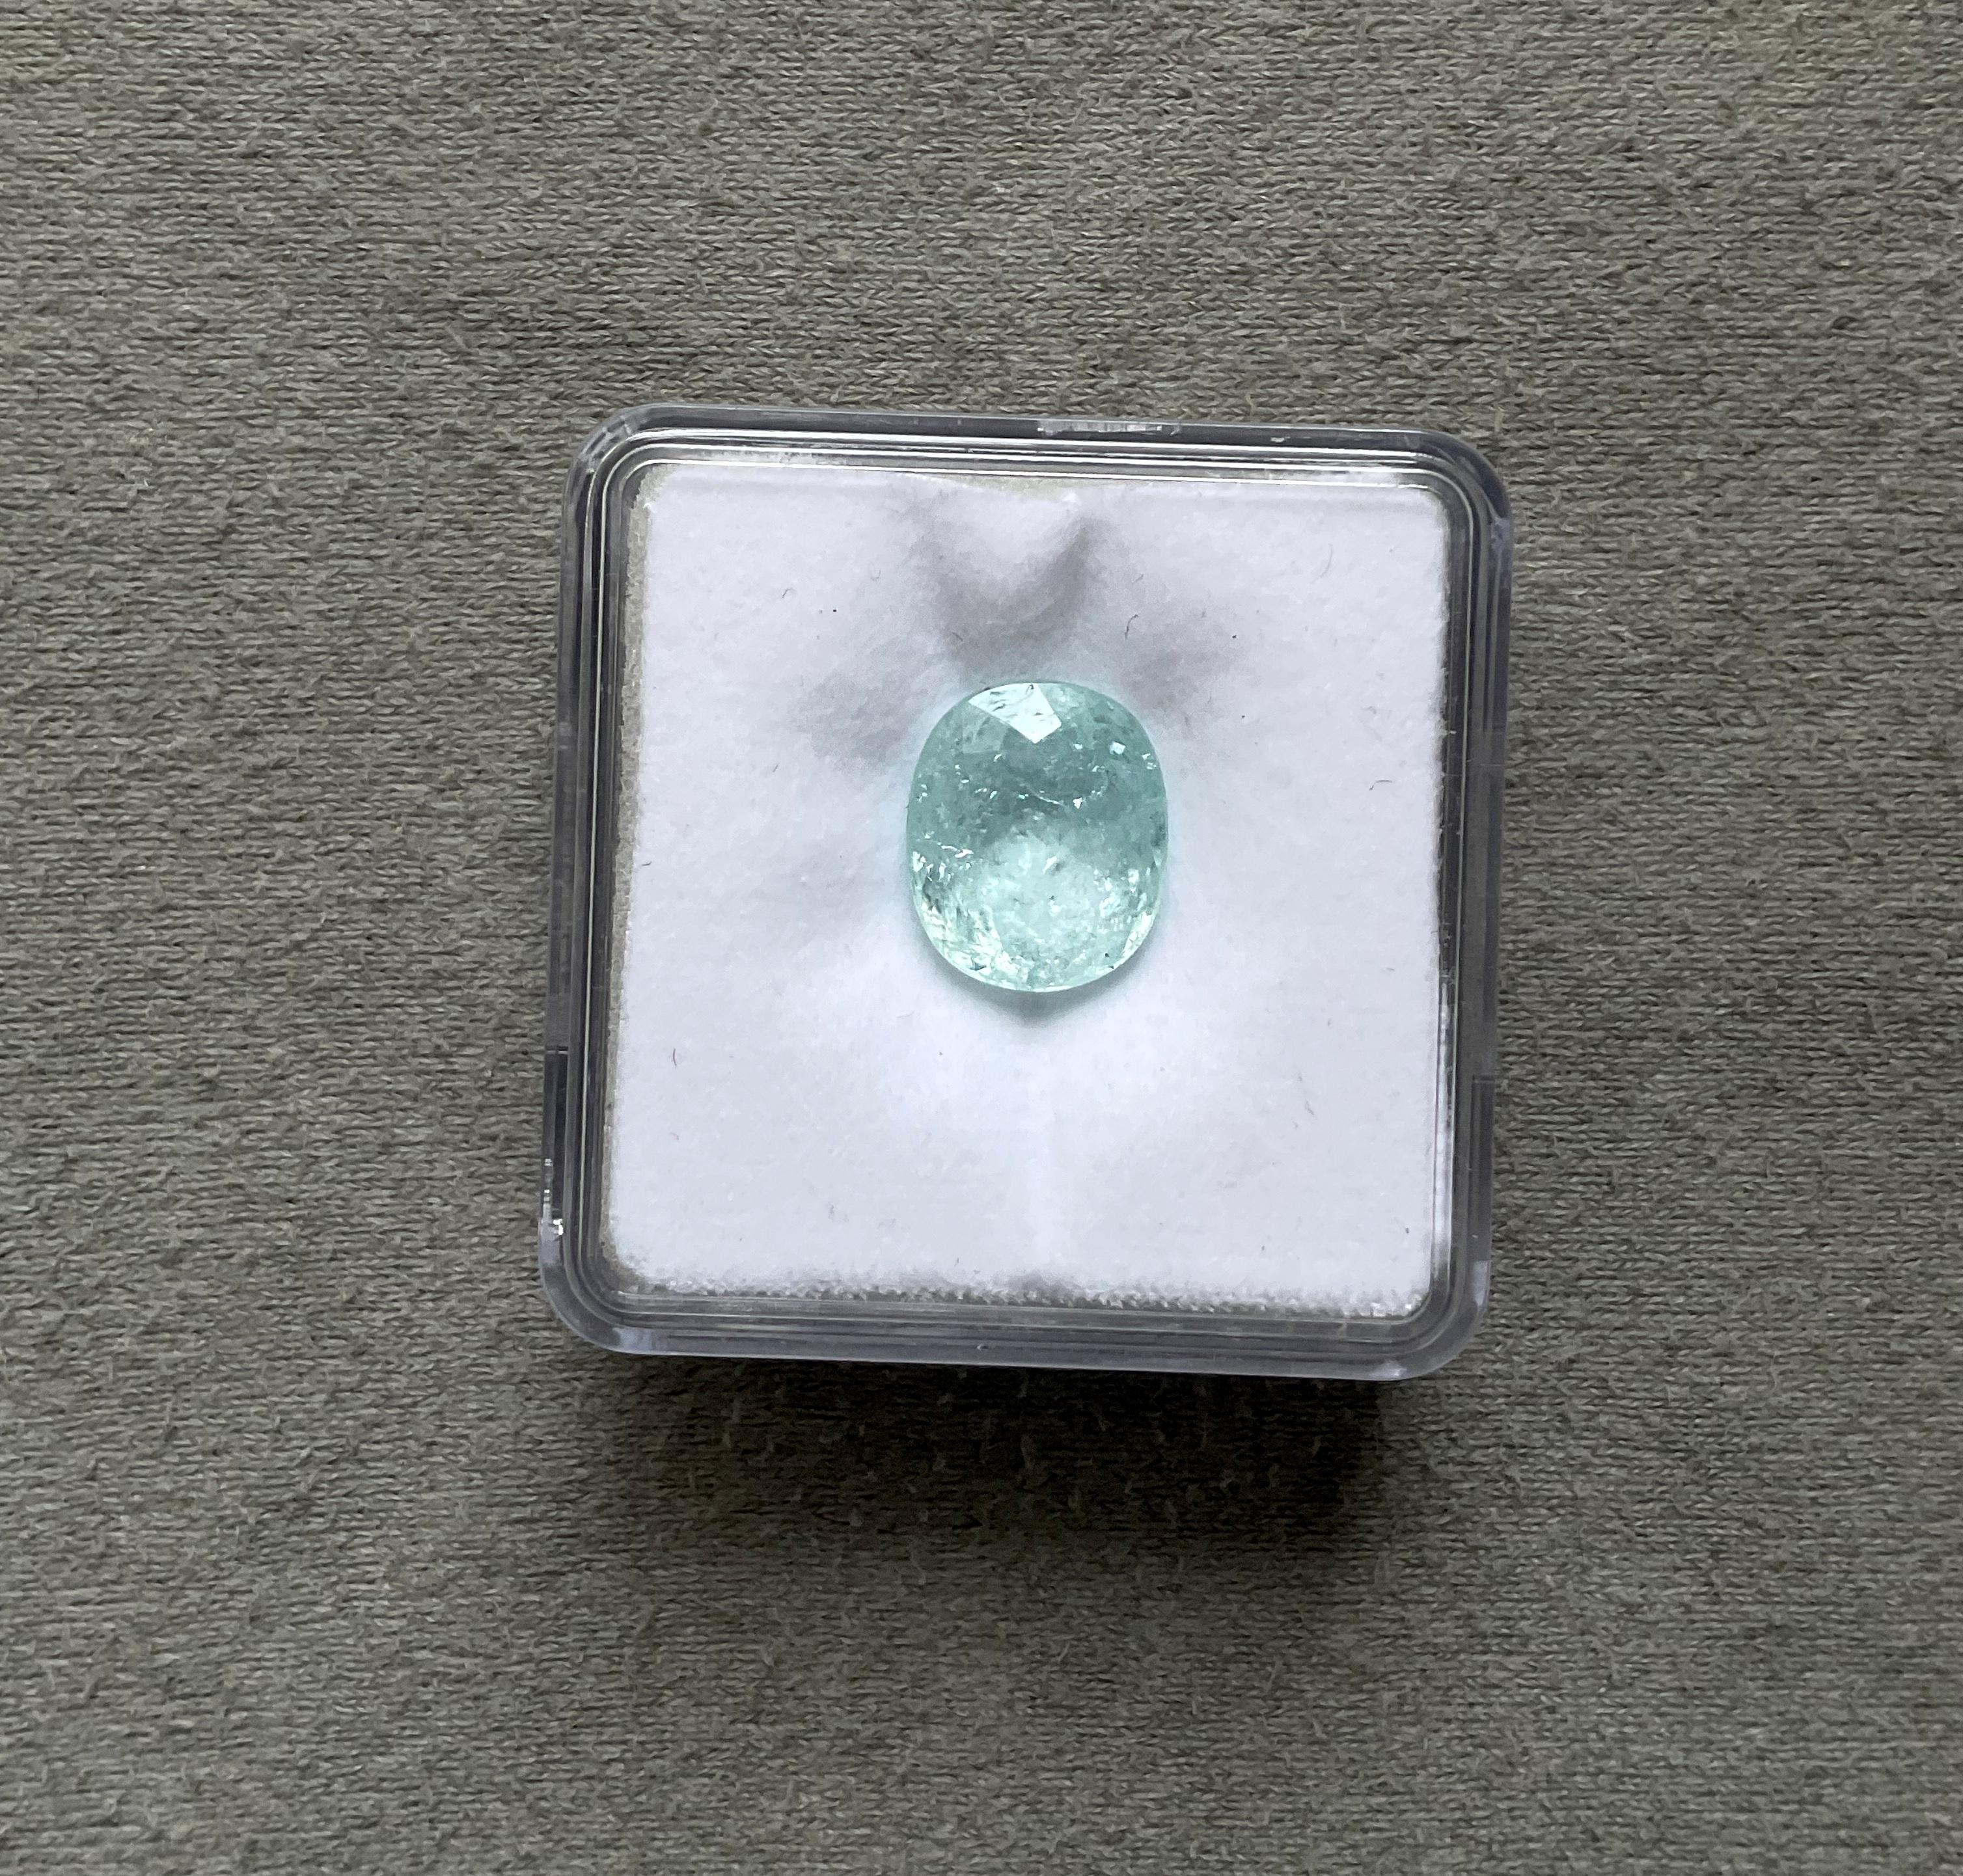 5.44 Carats Paraiba Tourmaline Oval Cut Stone for Fine Jewelry Natural gemstone

Gemstone - Paraiba Tourmaline
Weight - 5.44 carats
Size - 12x10 MM
Piece - 1
